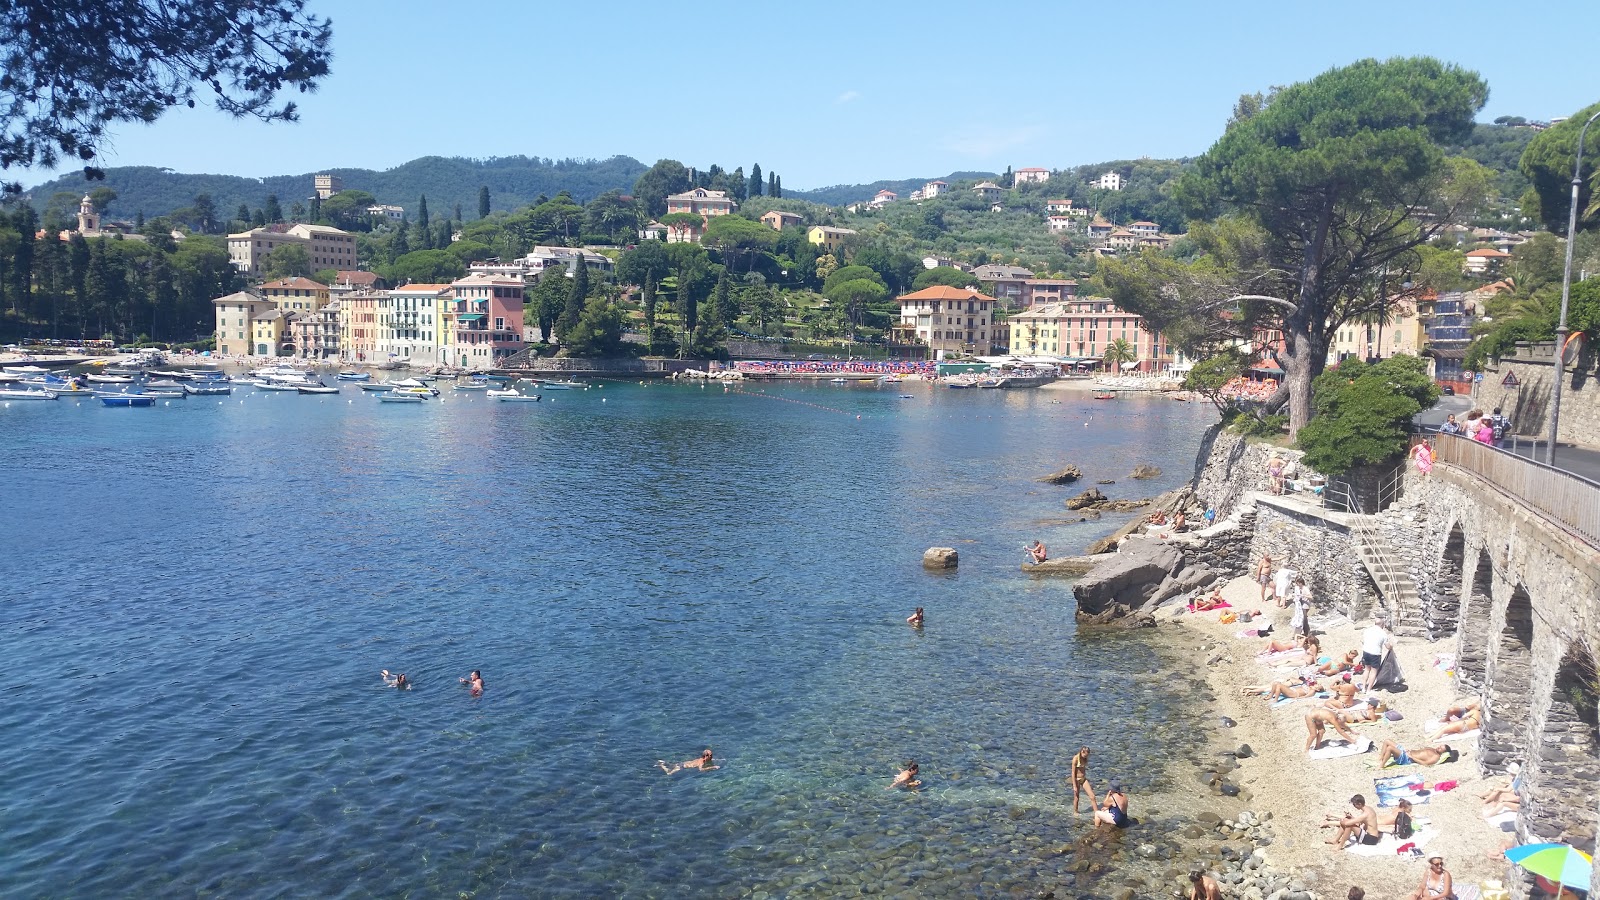 Fotografija San Michele beach z sivi fini kamenček površino